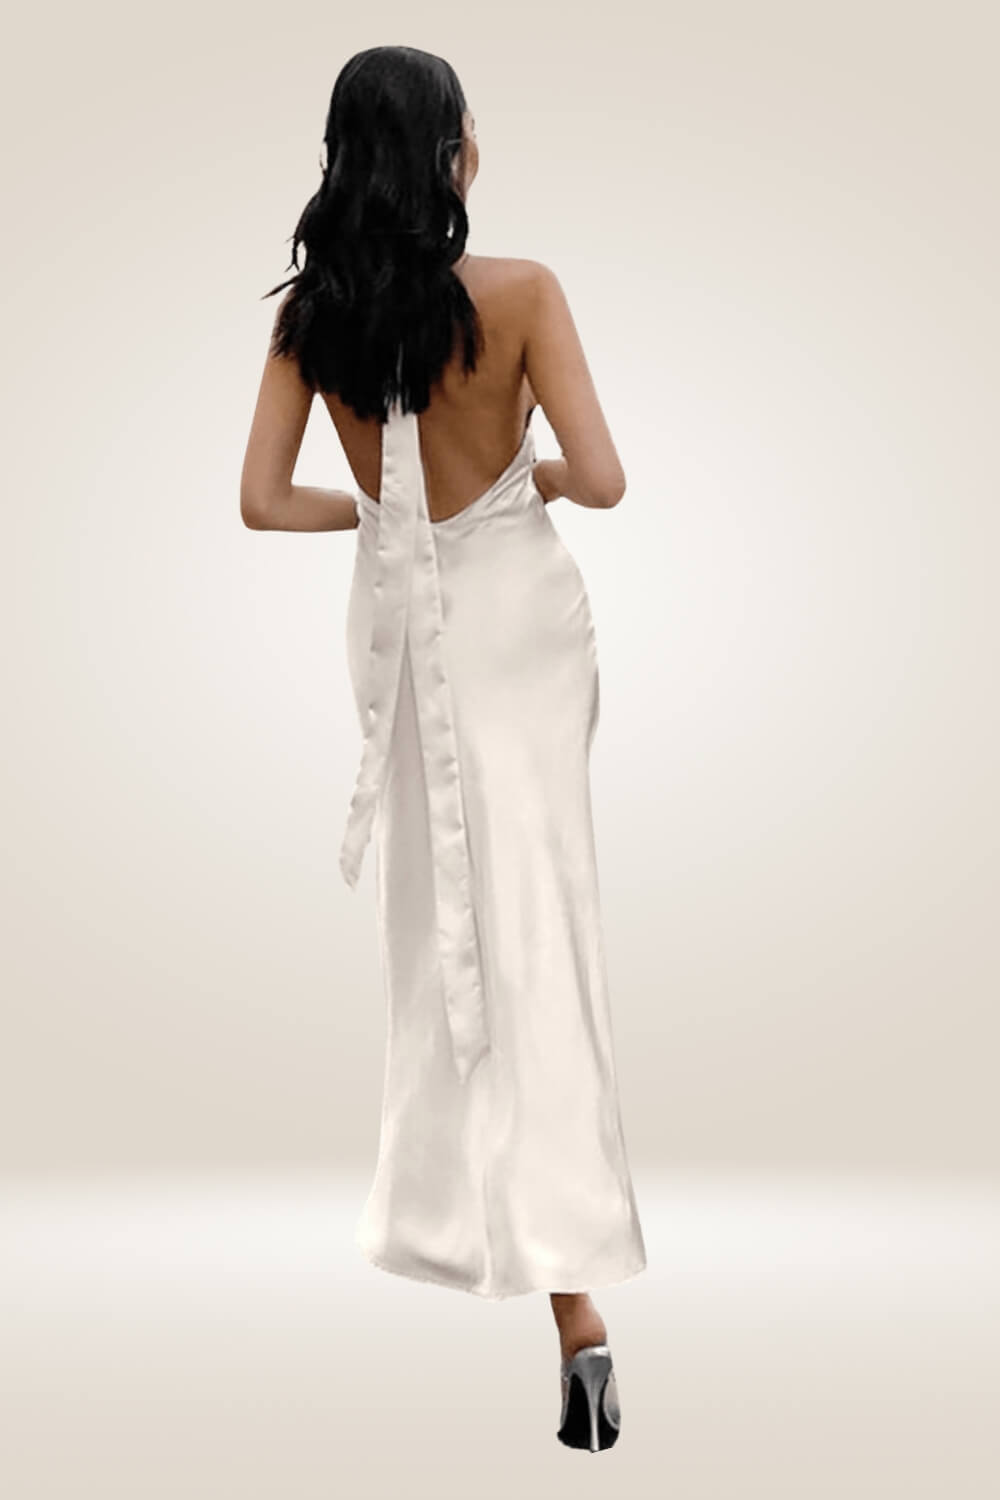 High Slit White Satin Dress - TGC Boutique - Maxi Dress